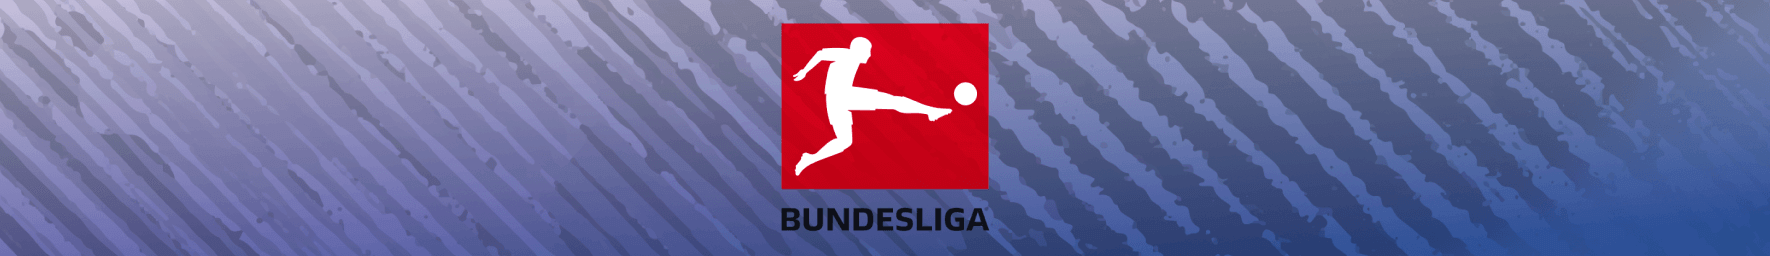 Niemiecka Bundesliga